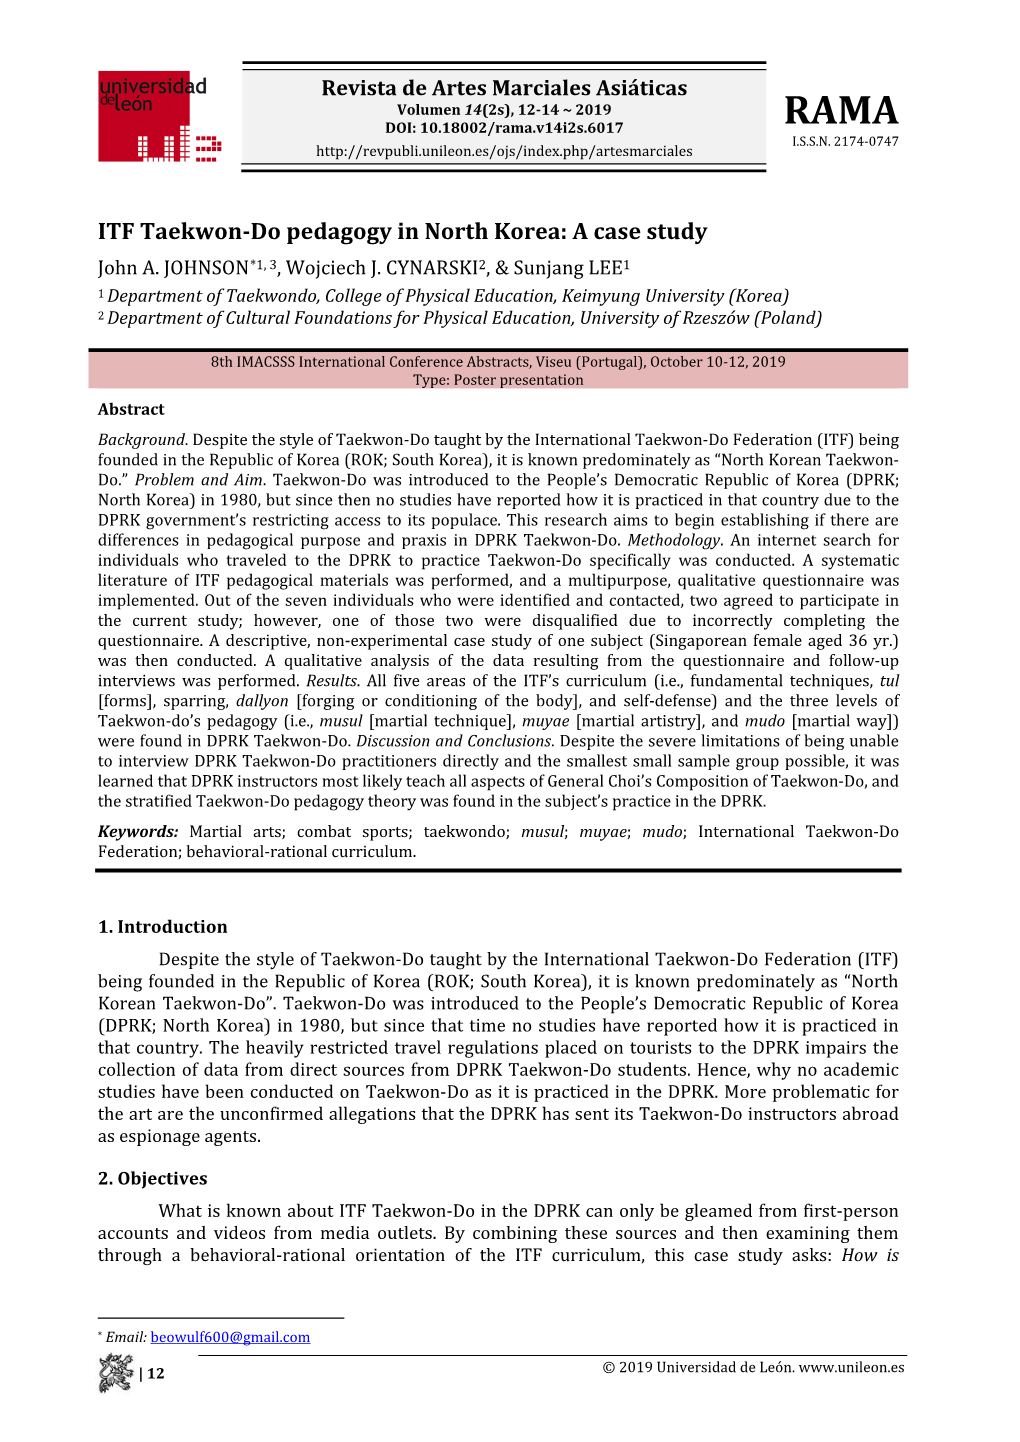 ITF Taekwon-Do Pedagogy in North Korea: a Case Study John A